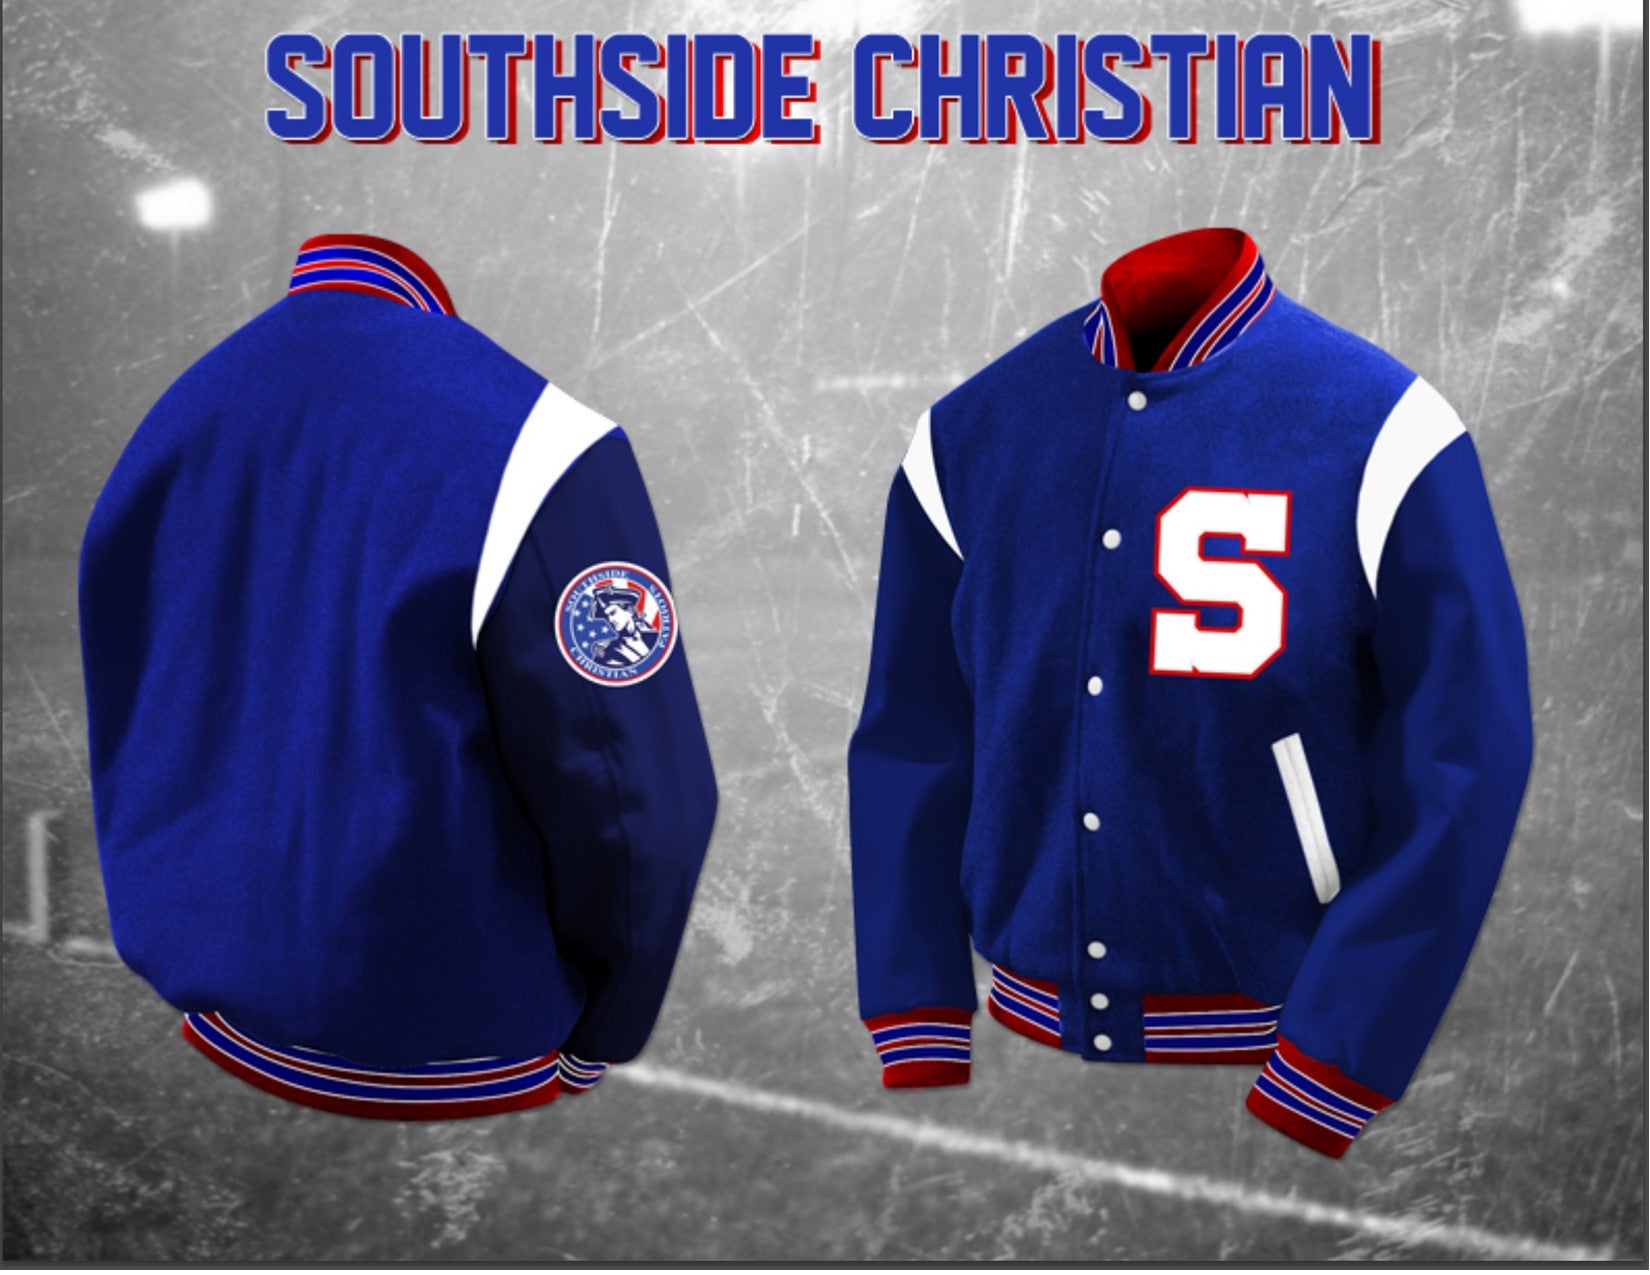 Southside Christian Letterman Jacket